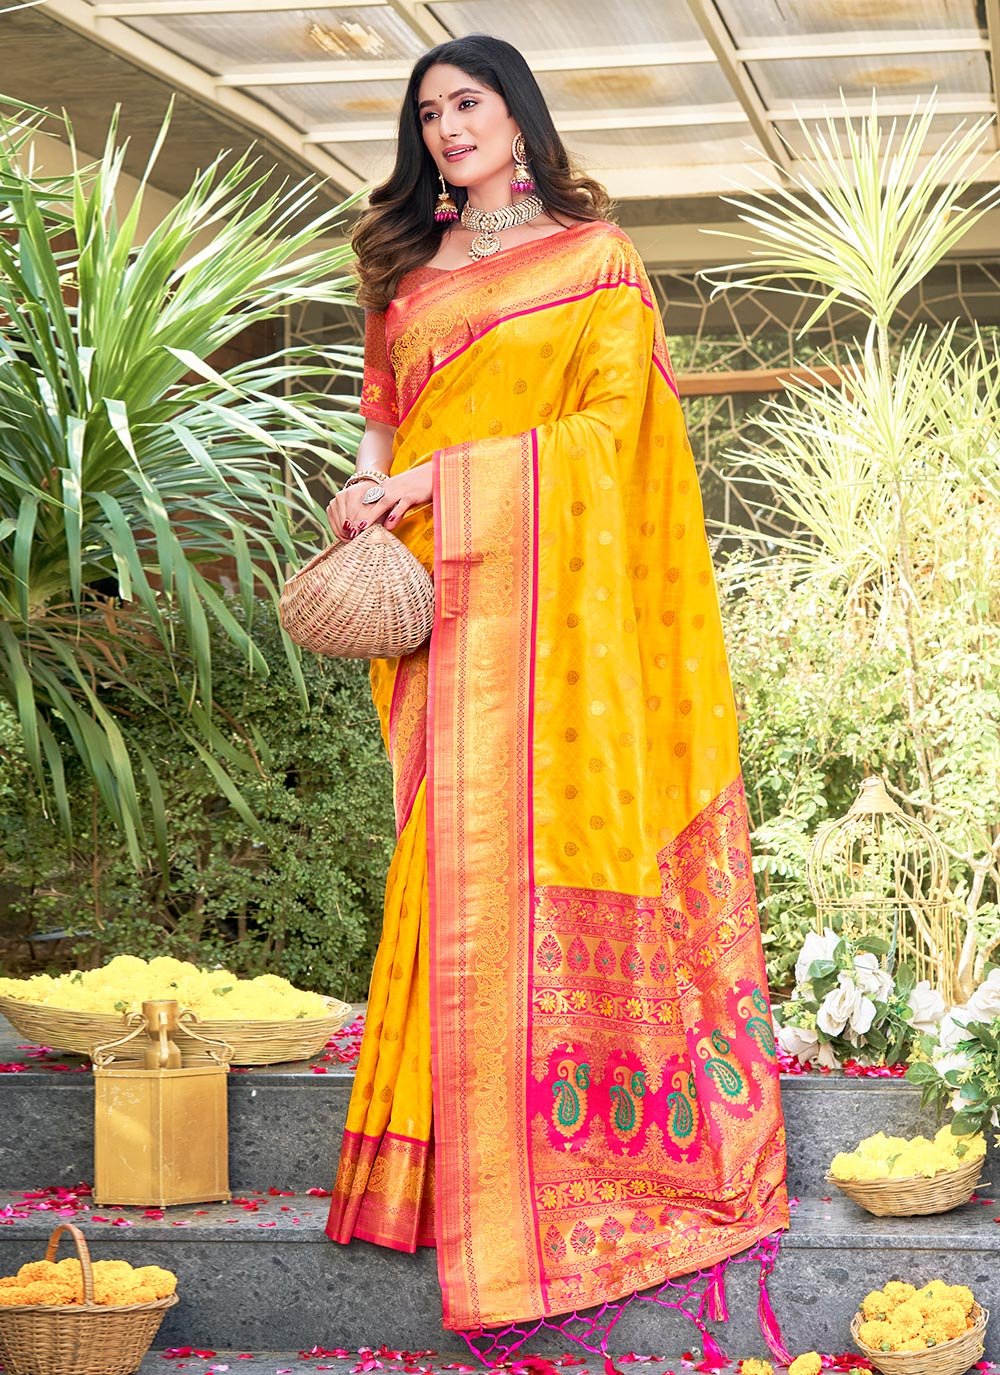 Woman wearing saree hi-res stock photography and images - Alamy